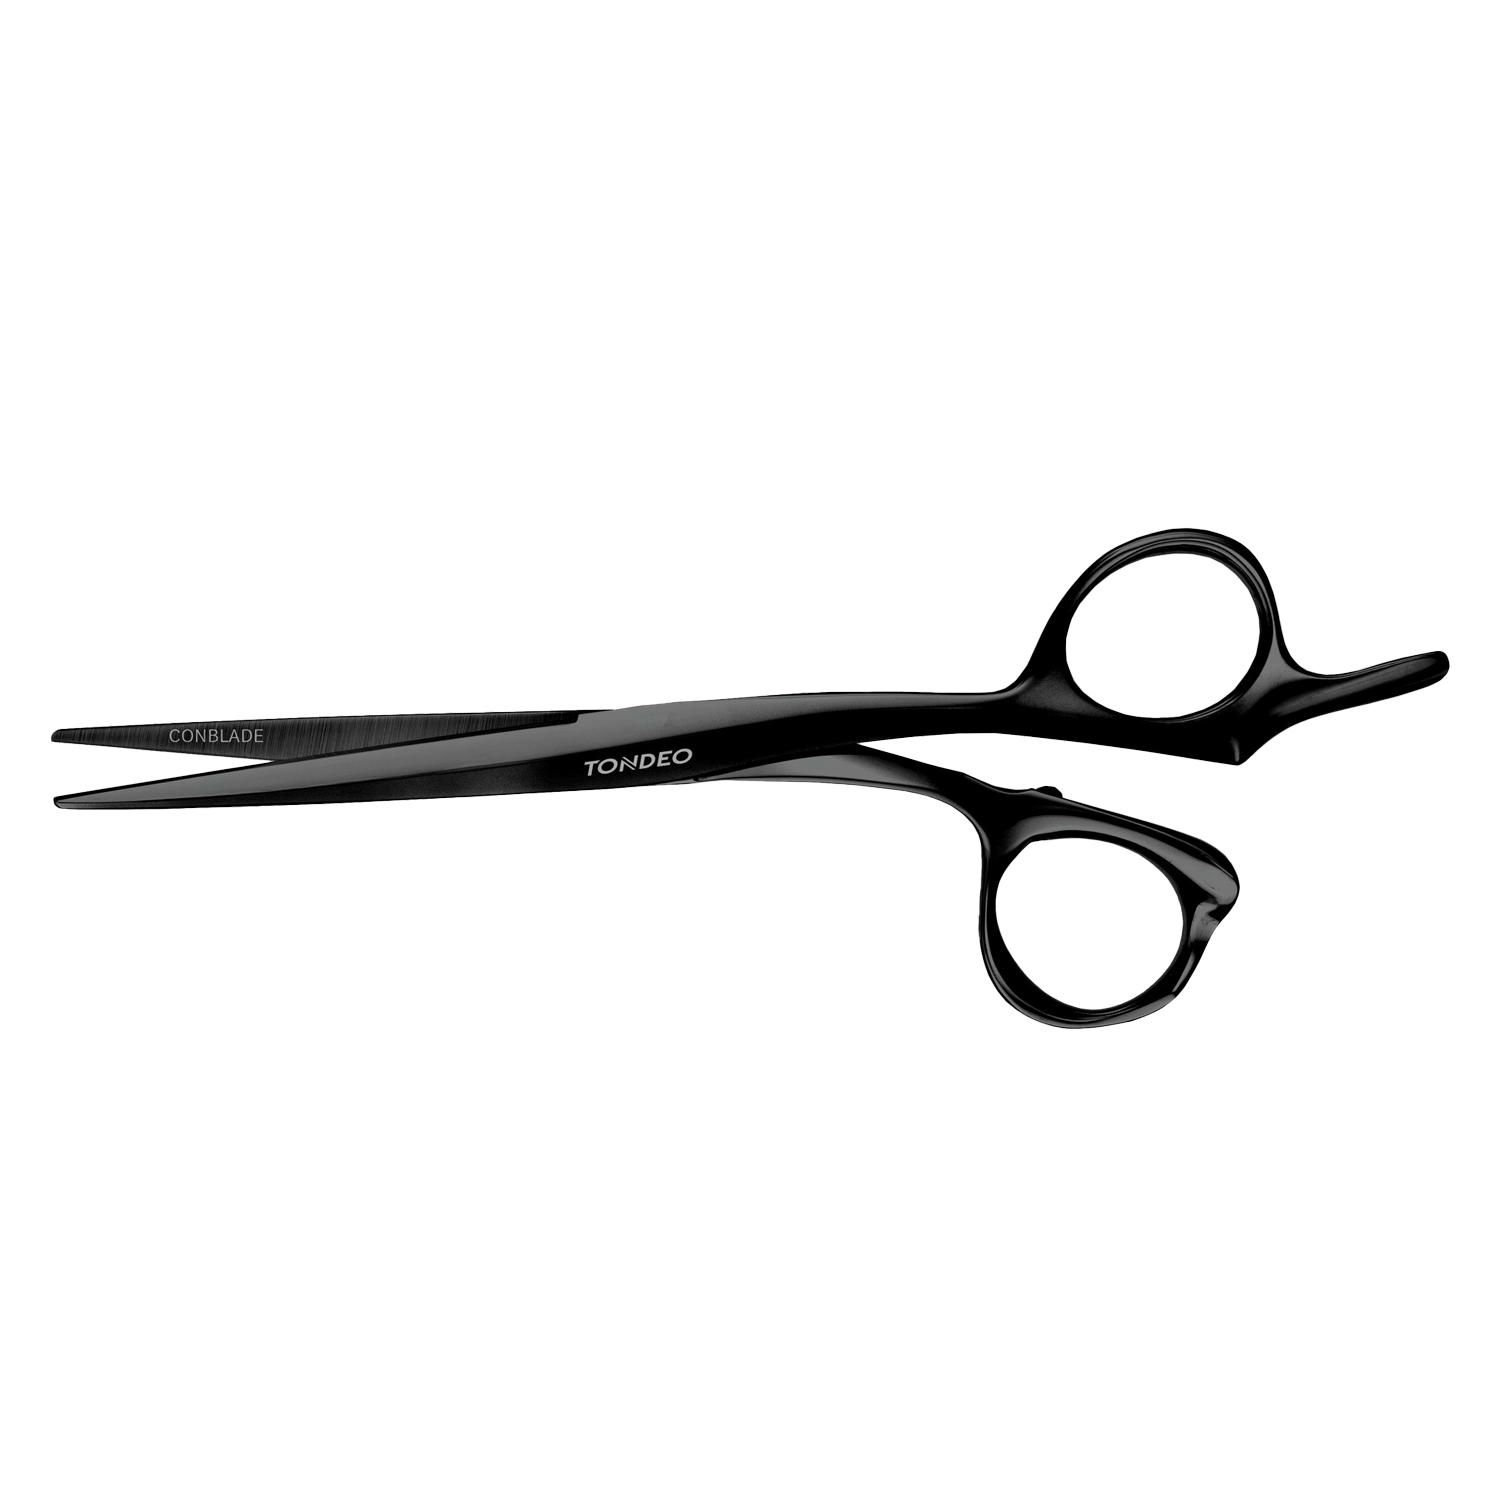 Produktbild von Tondeo Scissors - Zentao Black Offset Scissors 6.5" CONBLADE